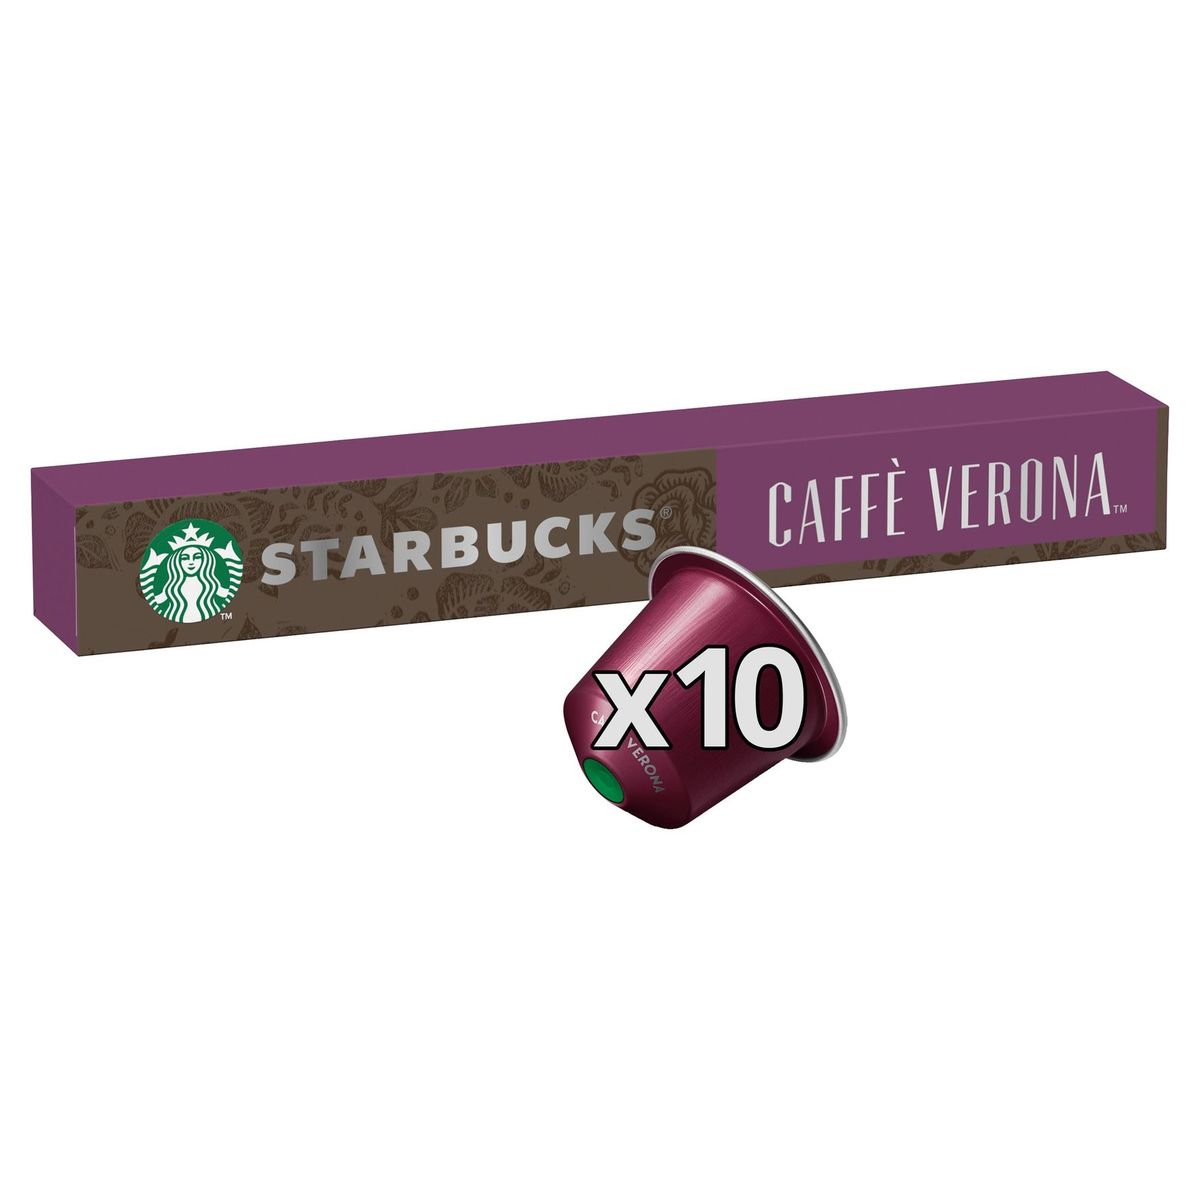 Starbucks by Nespresso Koffie Verona 10 Capsules12x55g